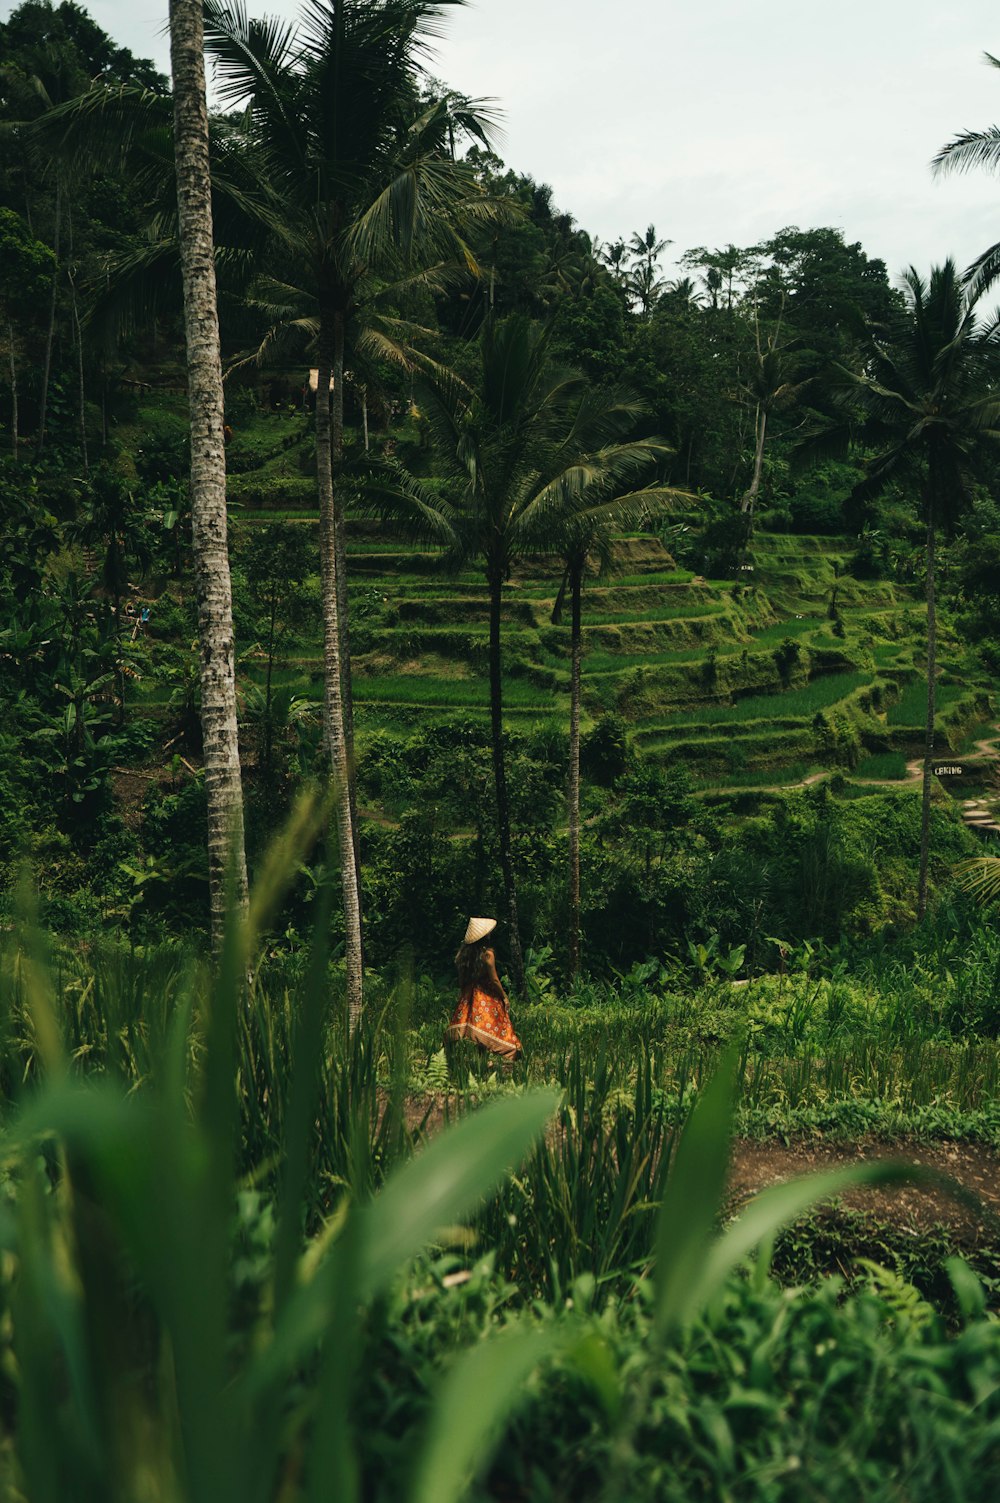 a woman in a straw hat walking through a lush green jungle